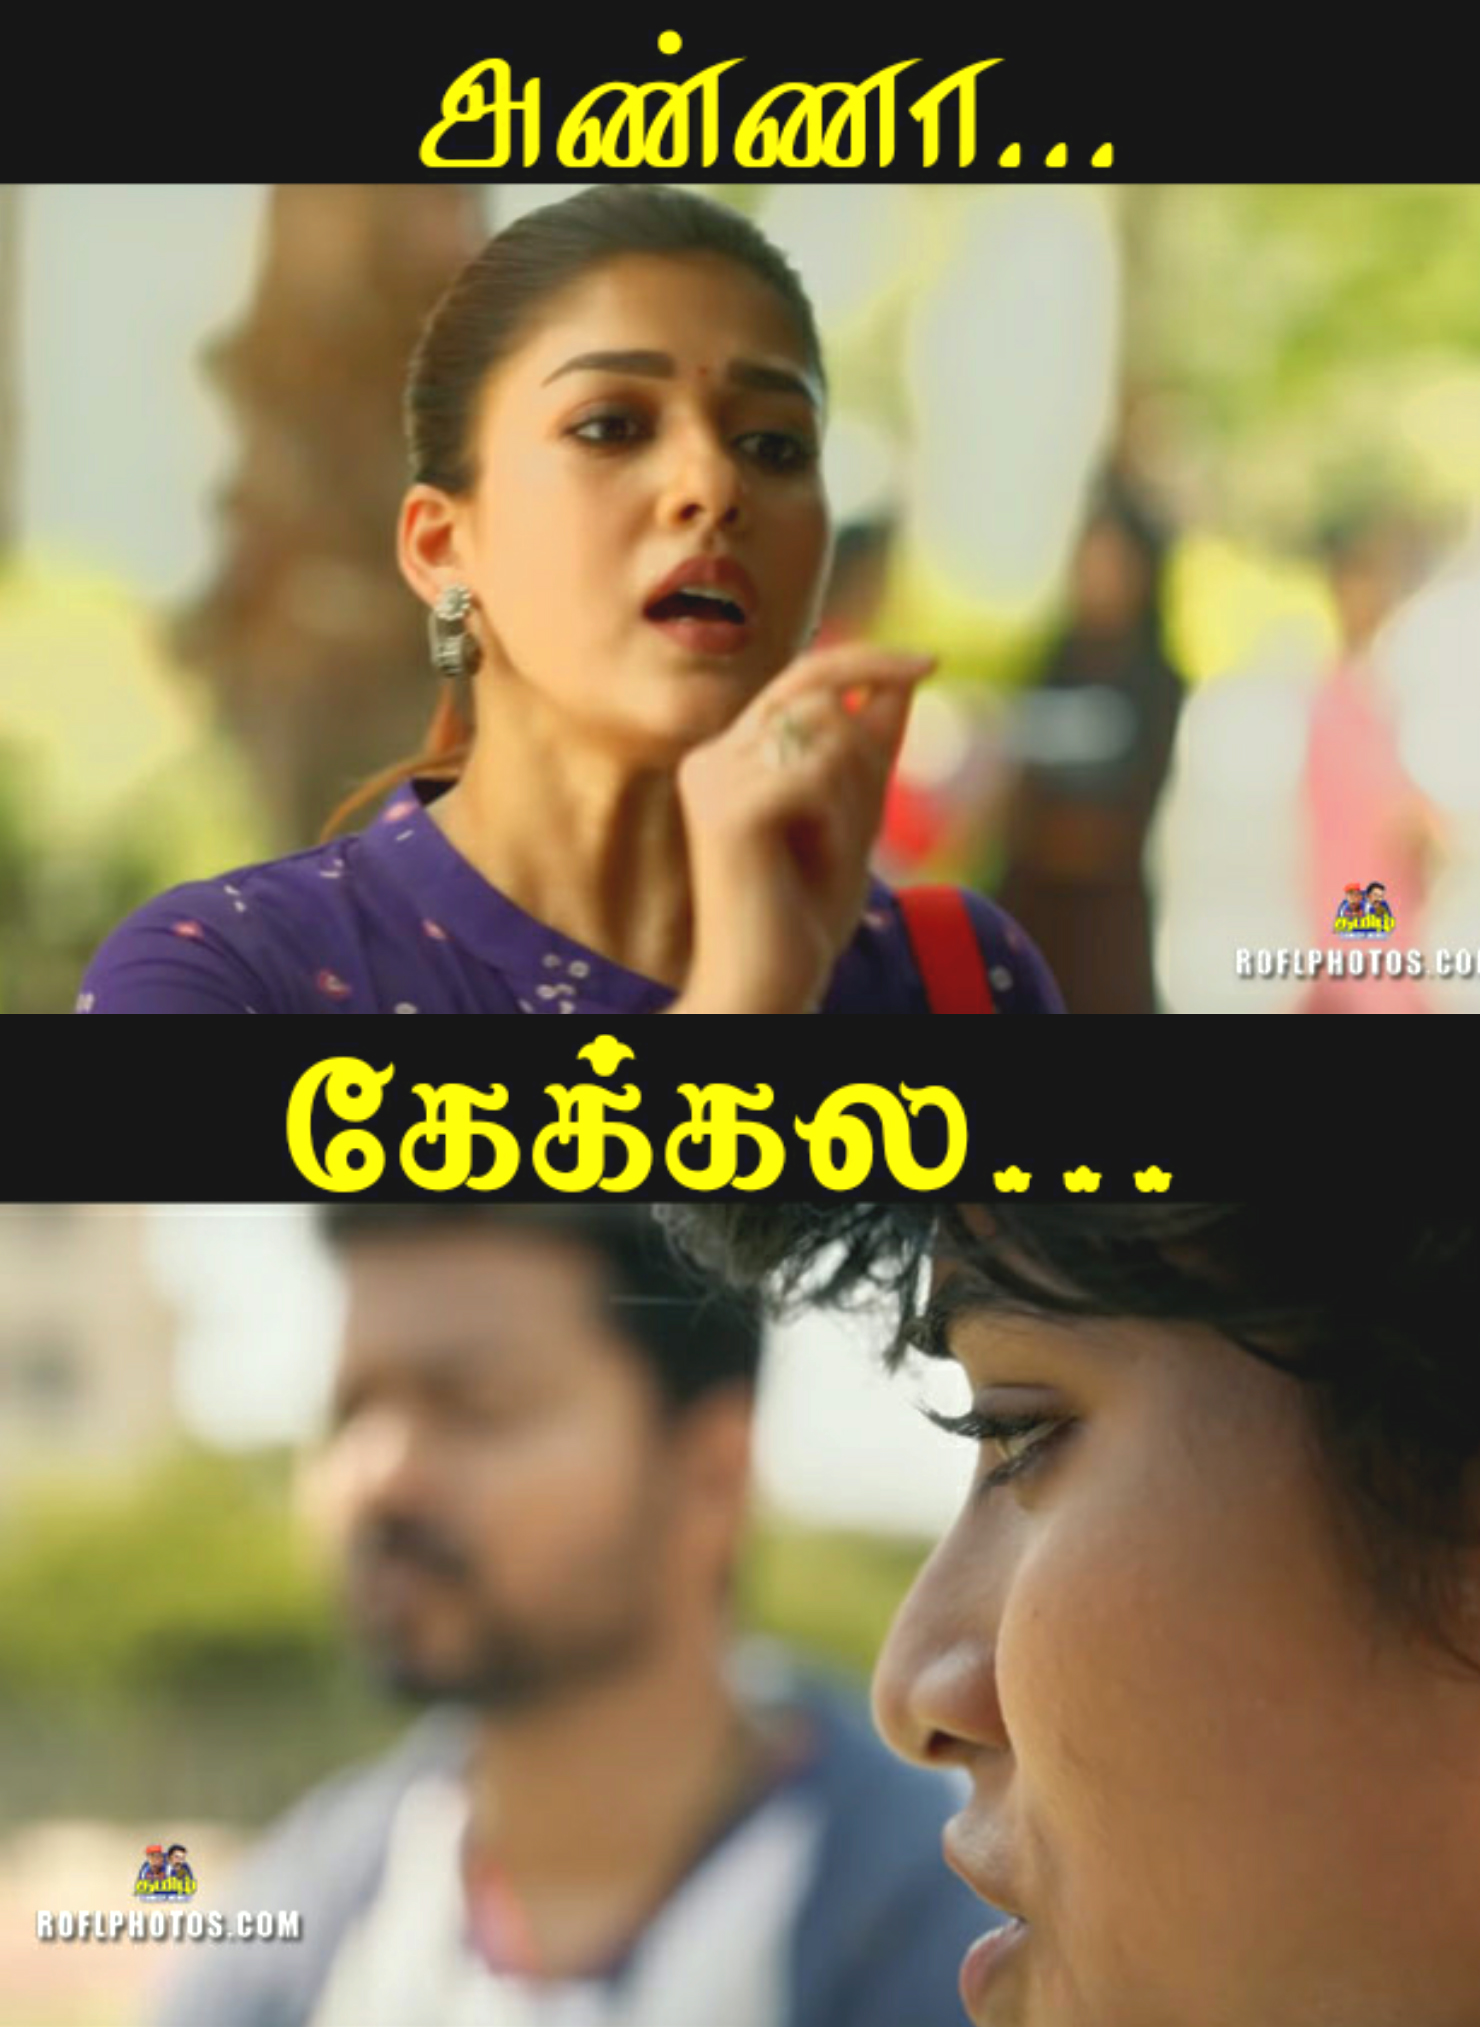 Tamil Movie Comedy Memes Funny Memes - vrogue.co